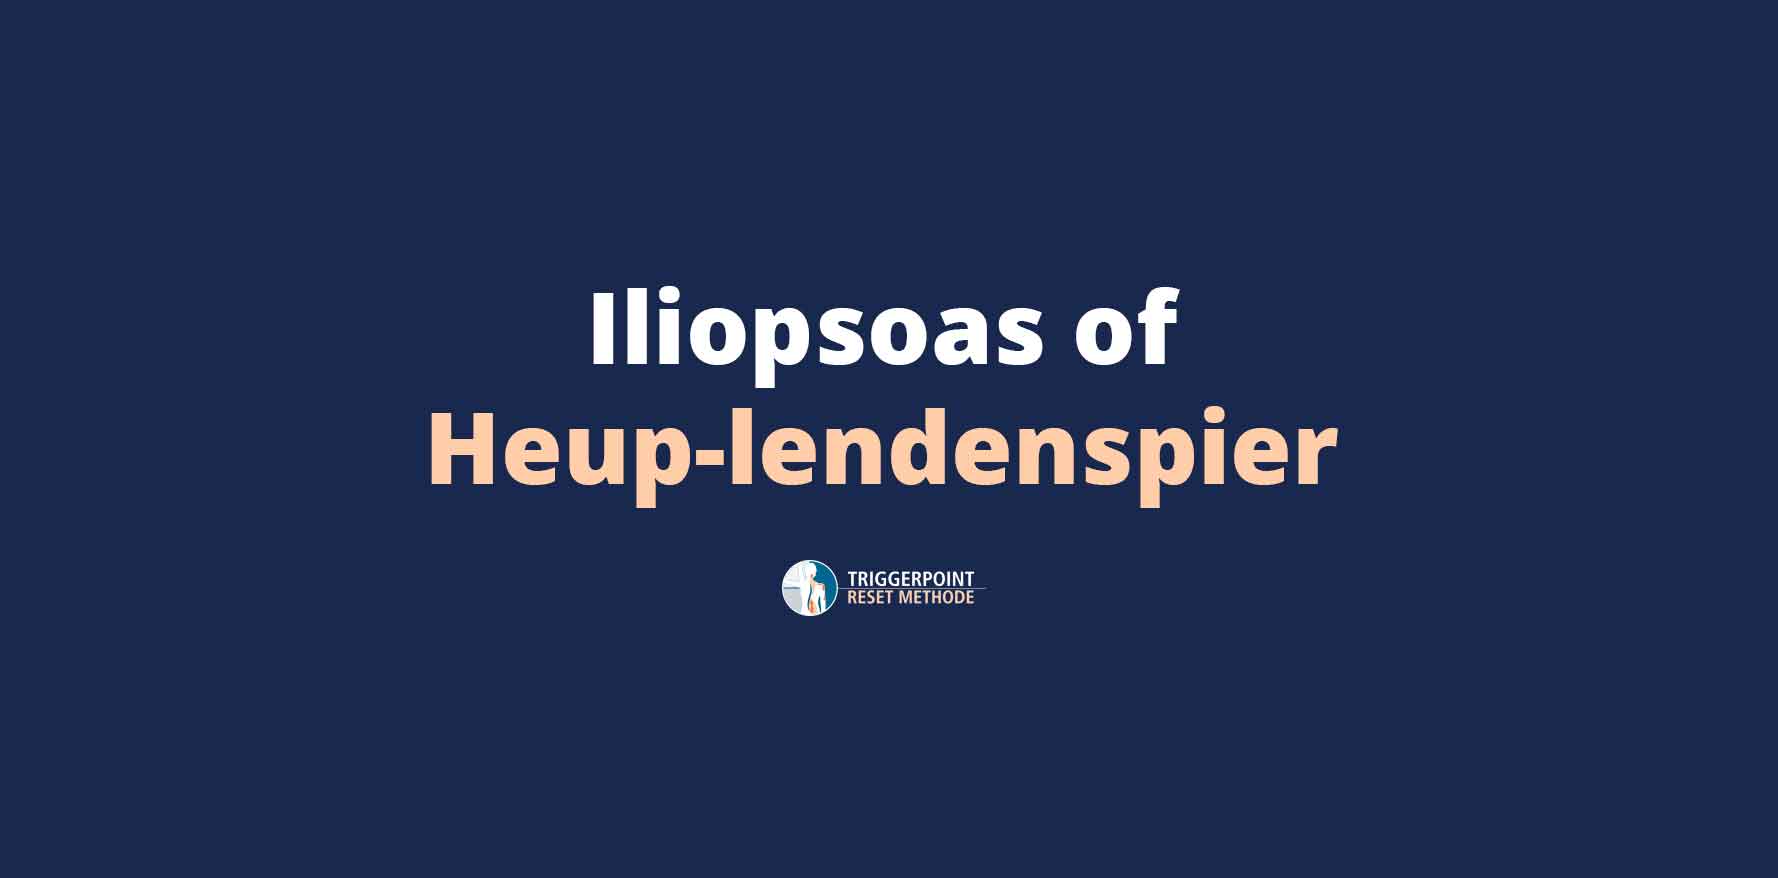 Iliopsoas of heup lendenspier